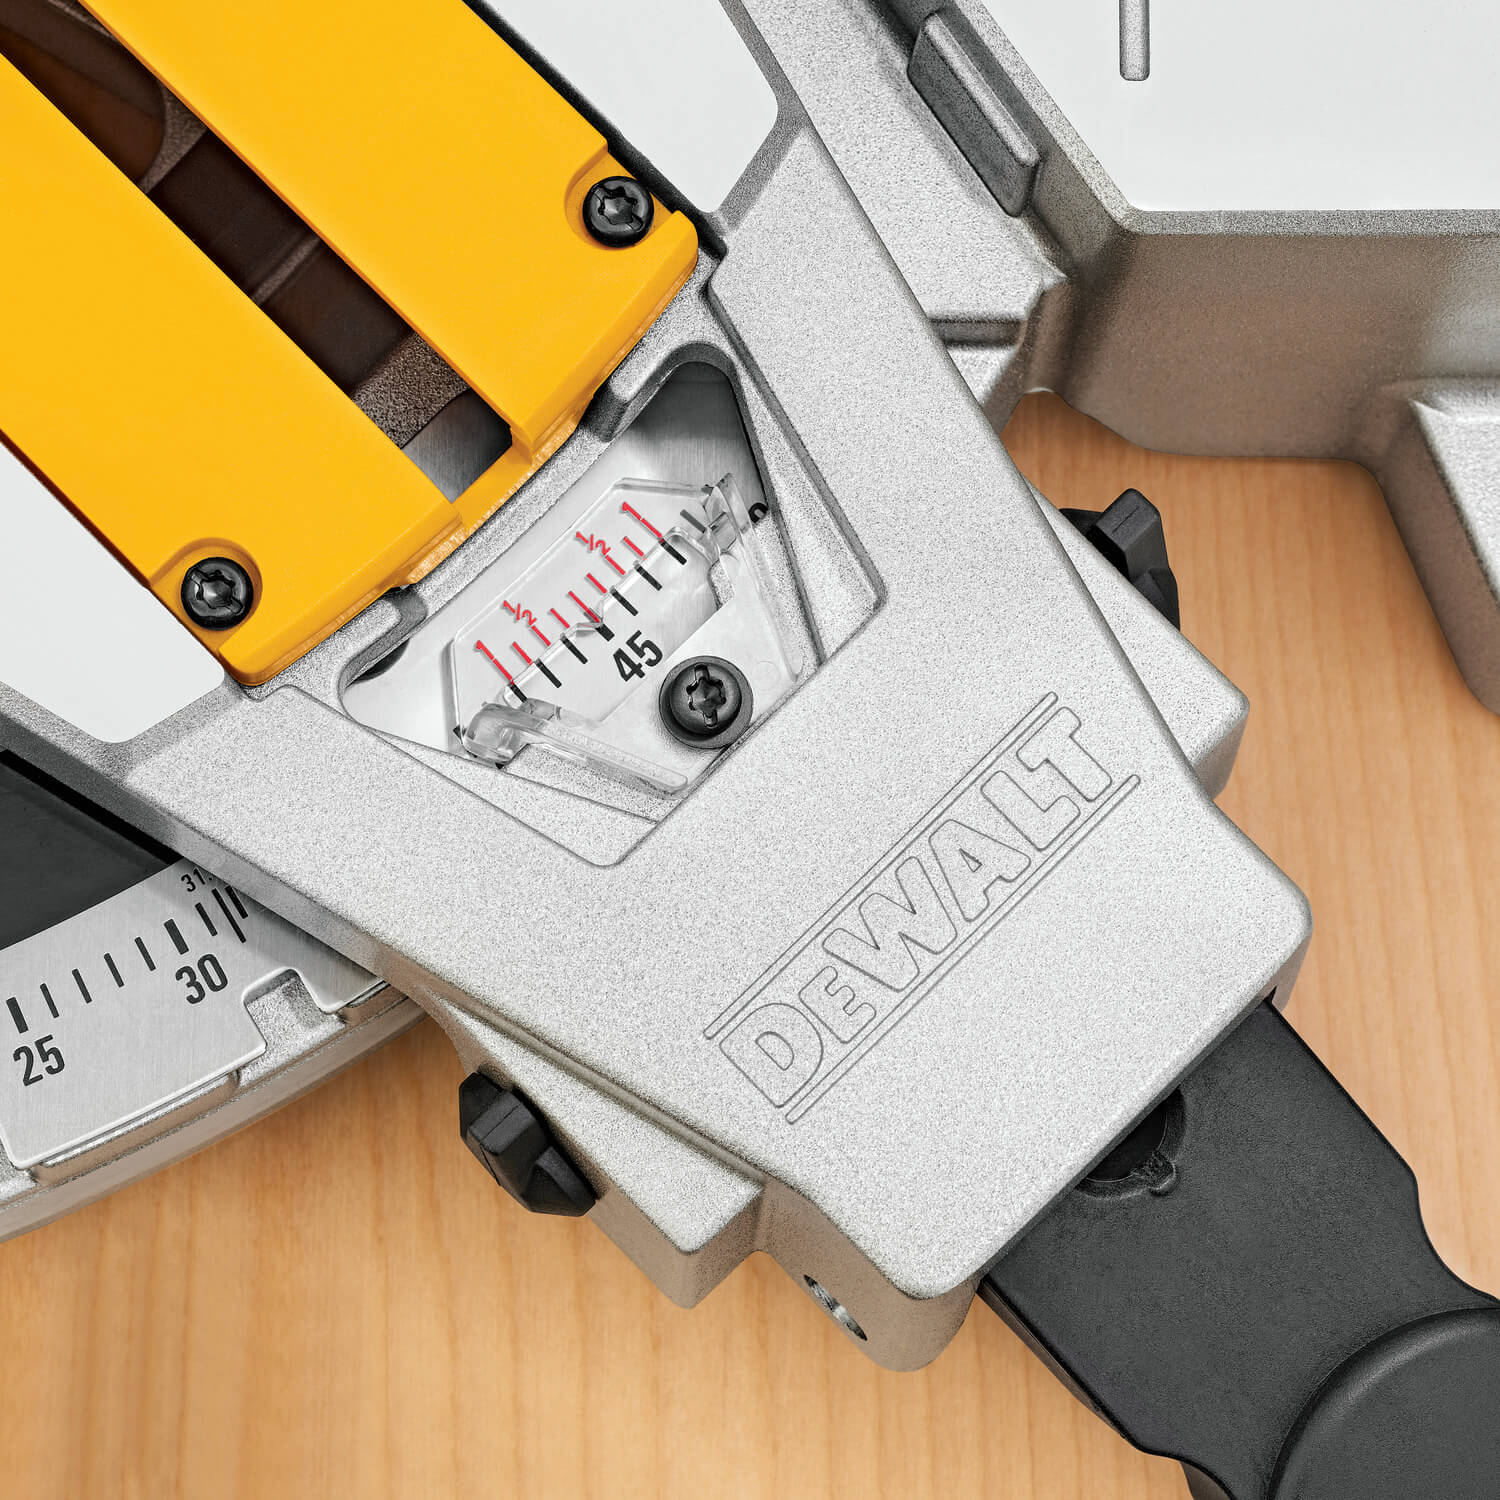 DEWALT DWS715 - 12" Single Bevel Compound Mitre Saw - wise-line-tools